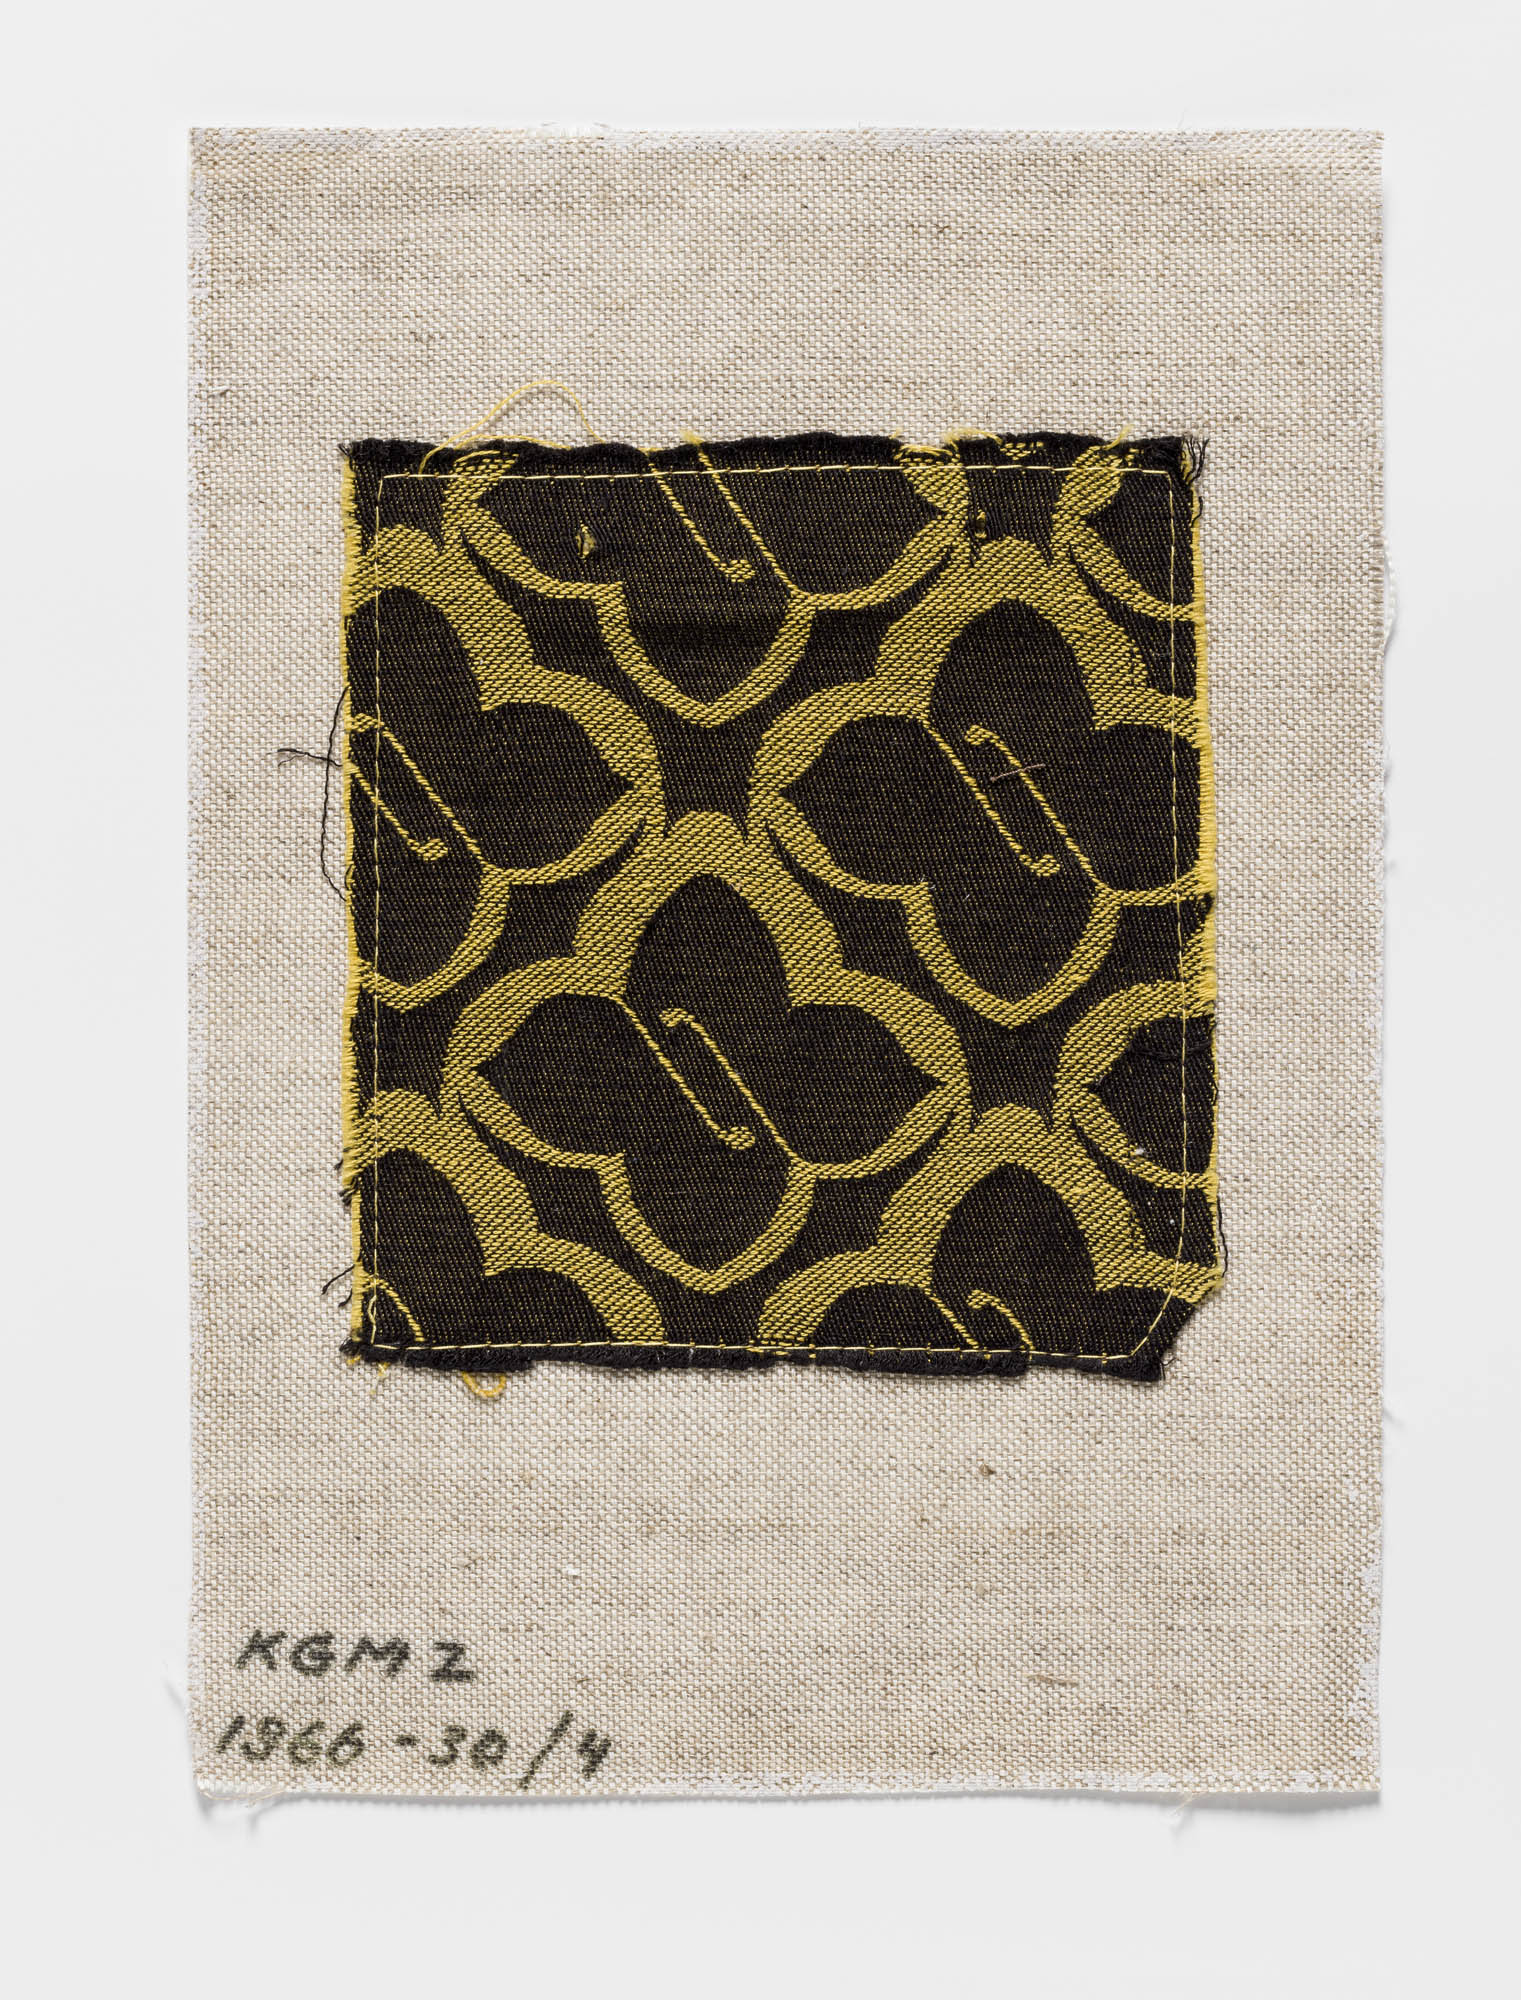 (untitled) Henry van de Velde Furnishing fabric